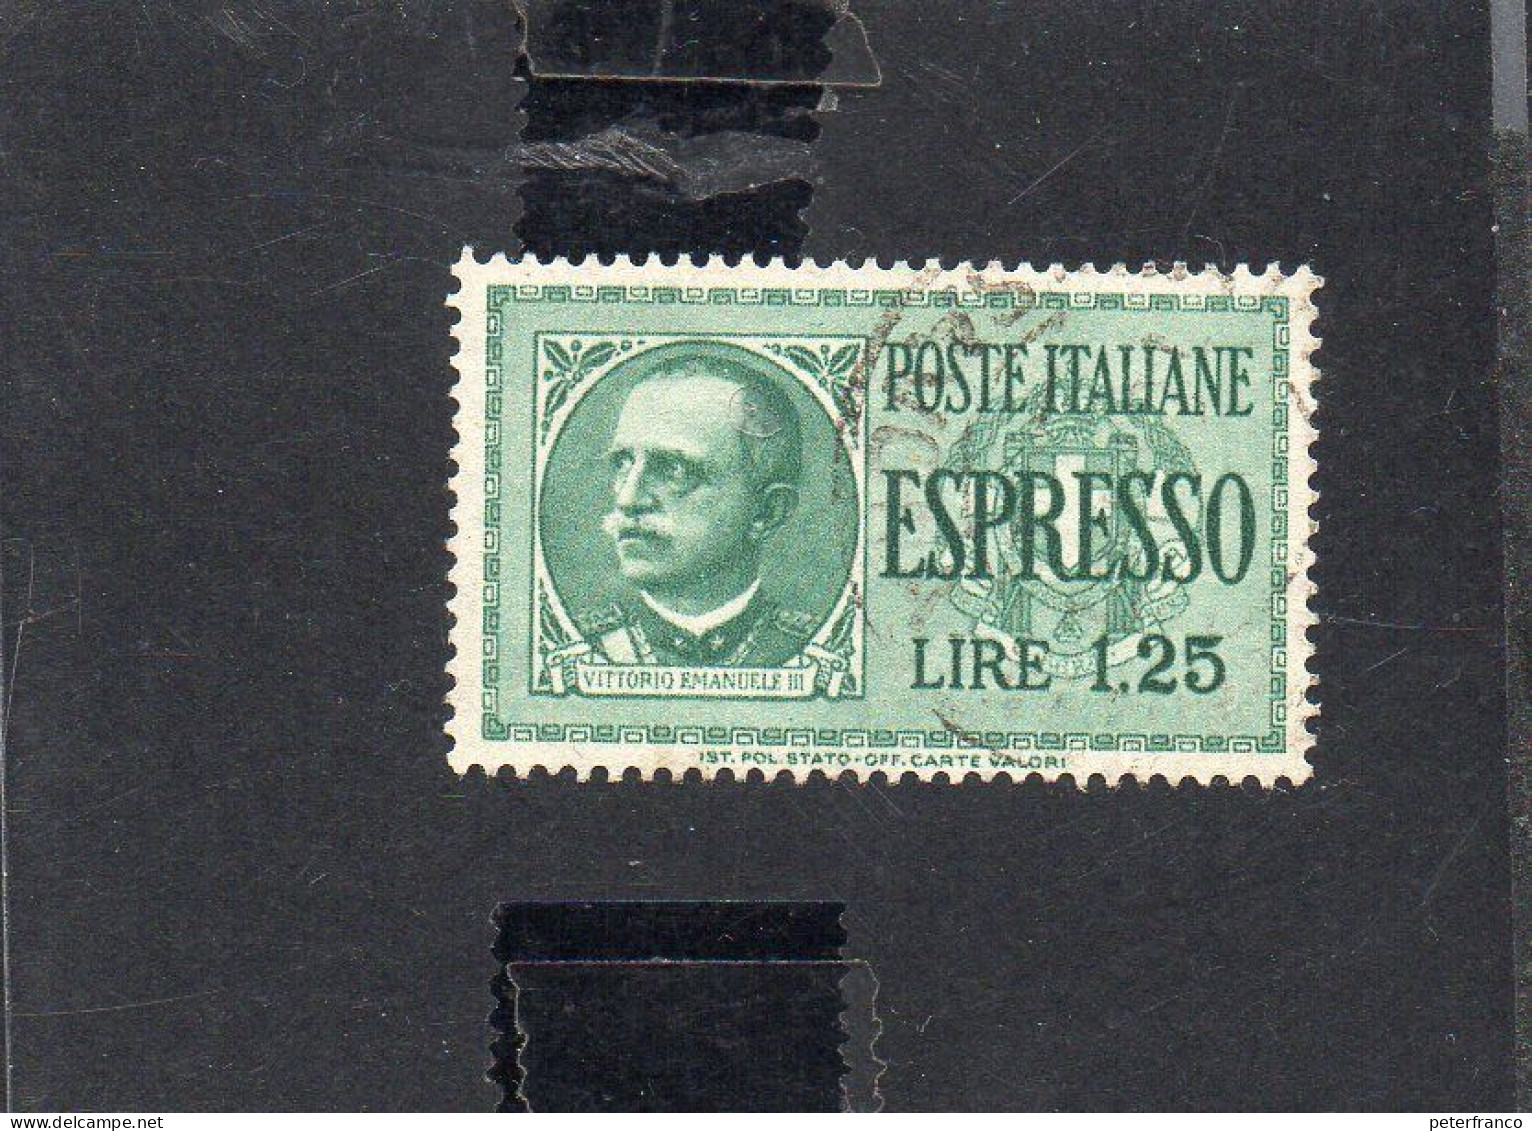 1932 Italia - Espresso - Eilsendung (Eilpost)